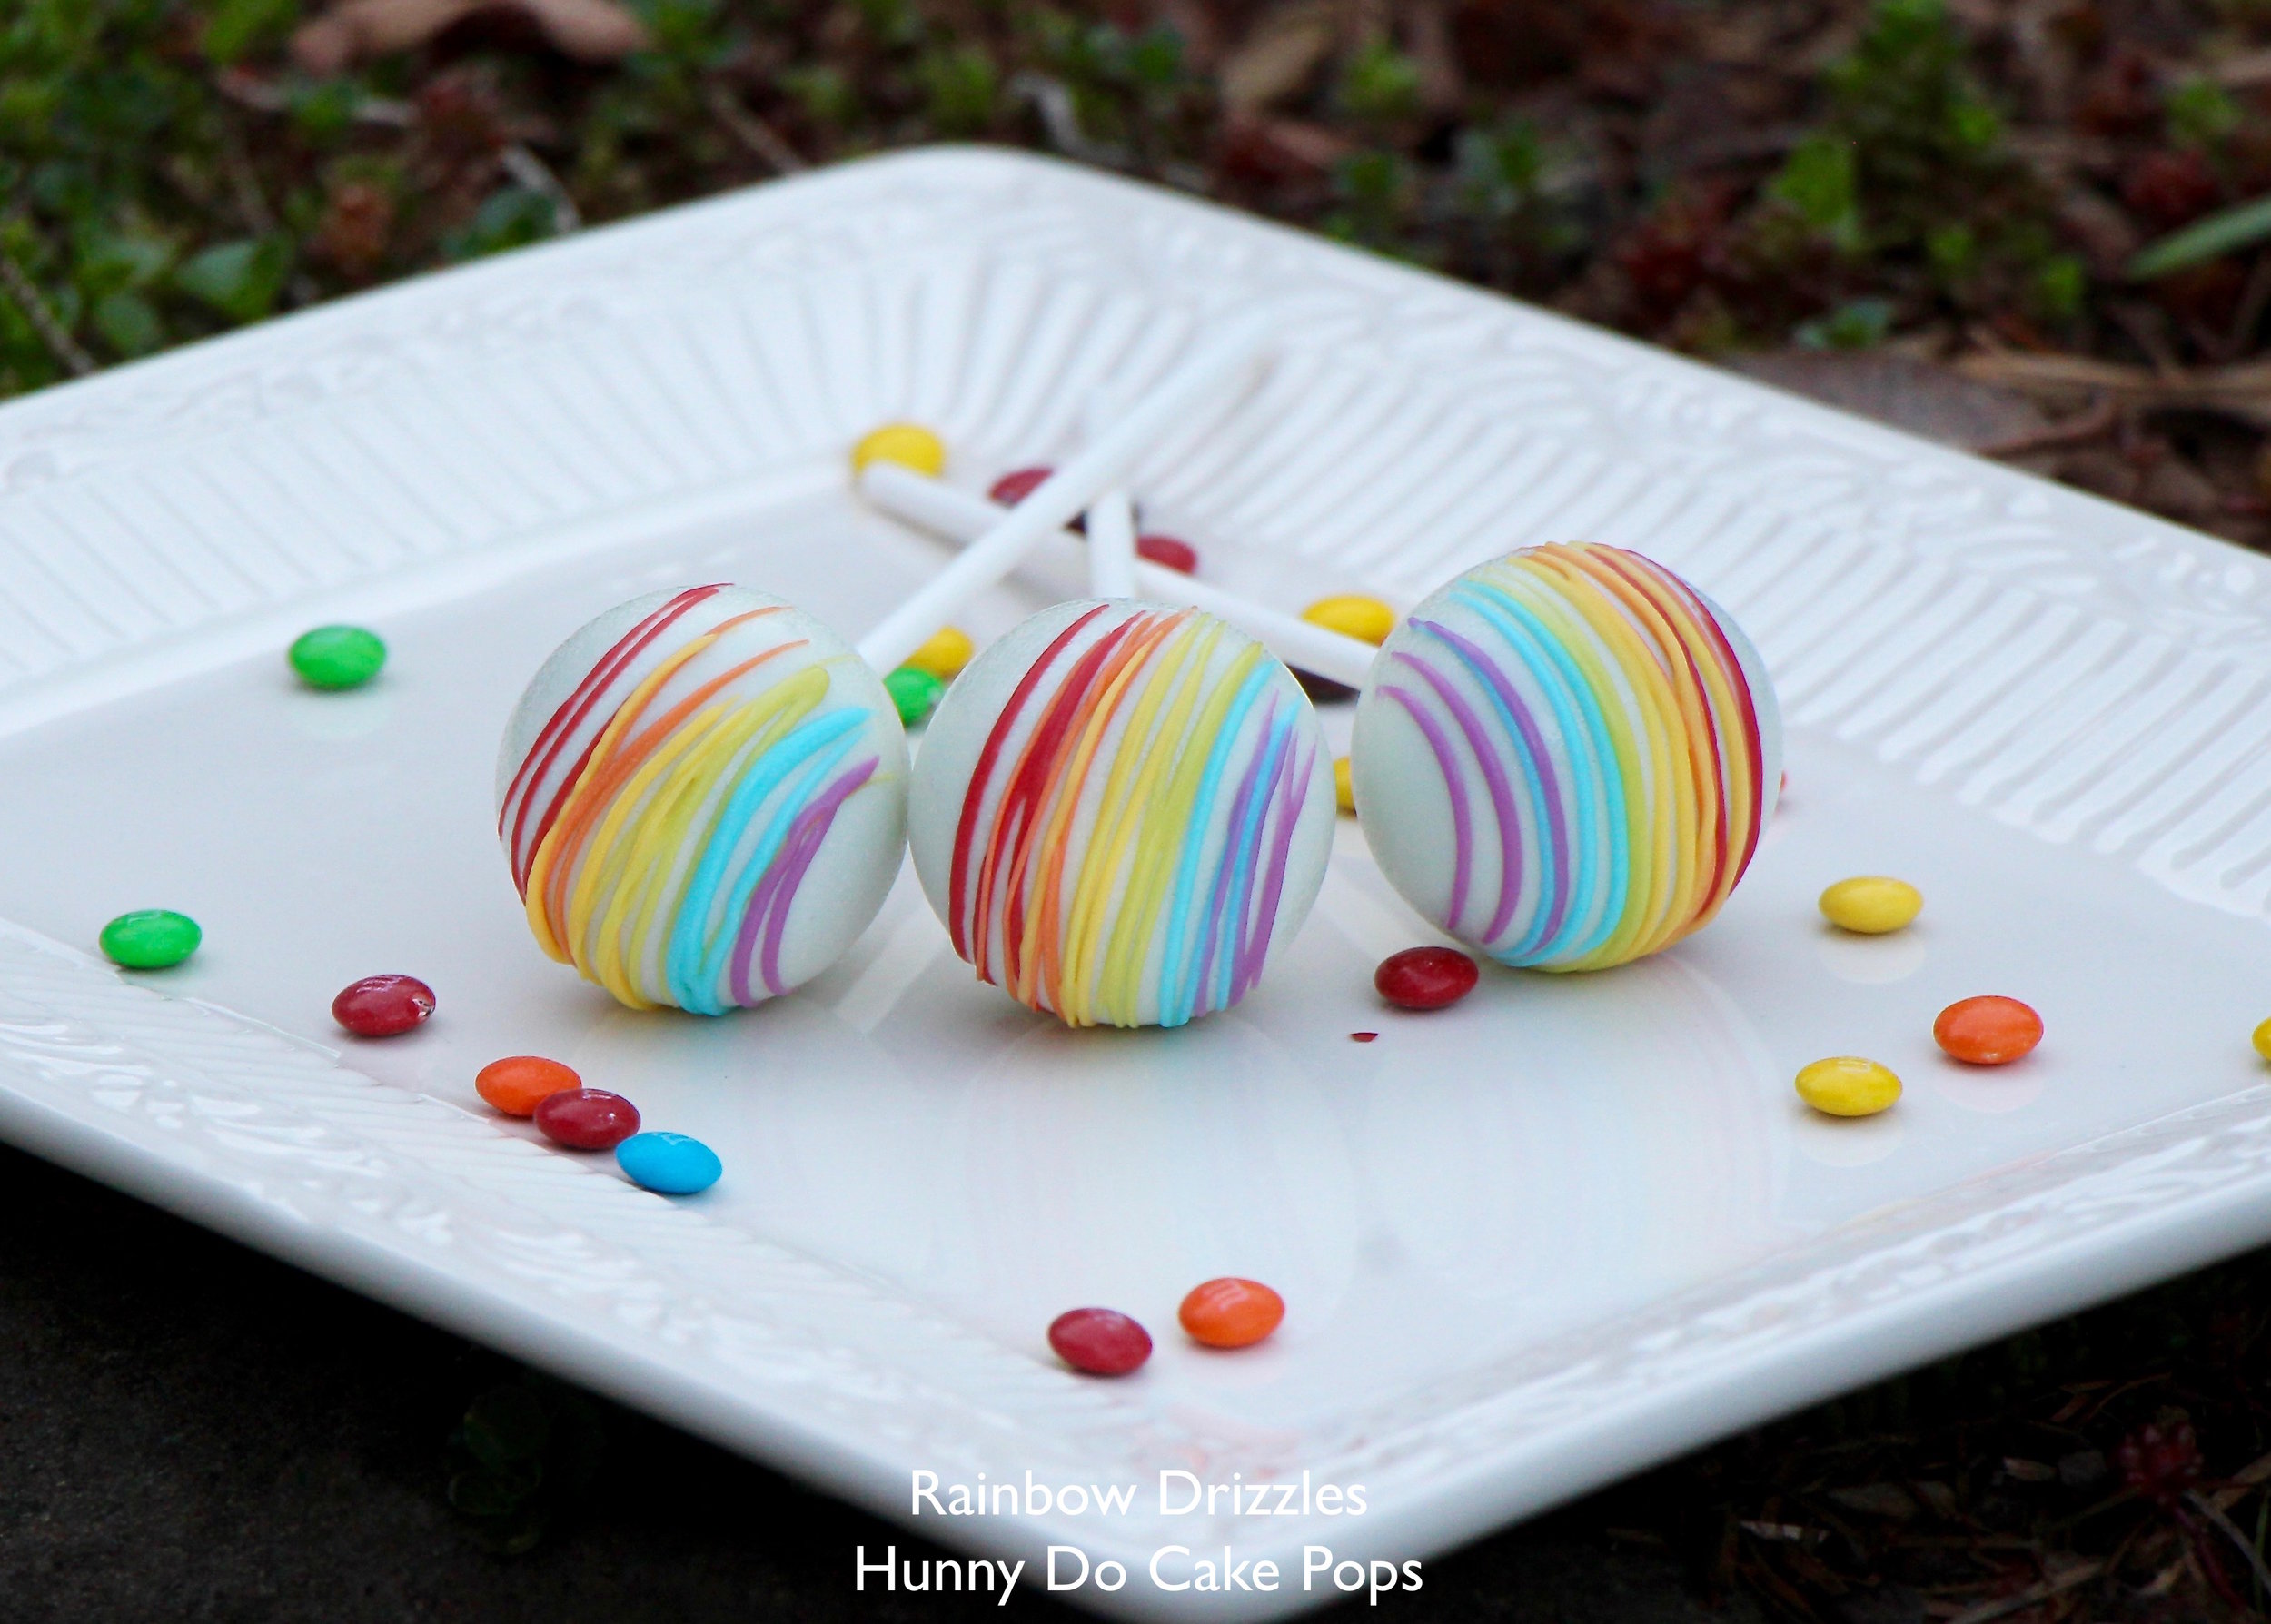 Rainbow drizzles cake pops HunnyDo 1.jpg